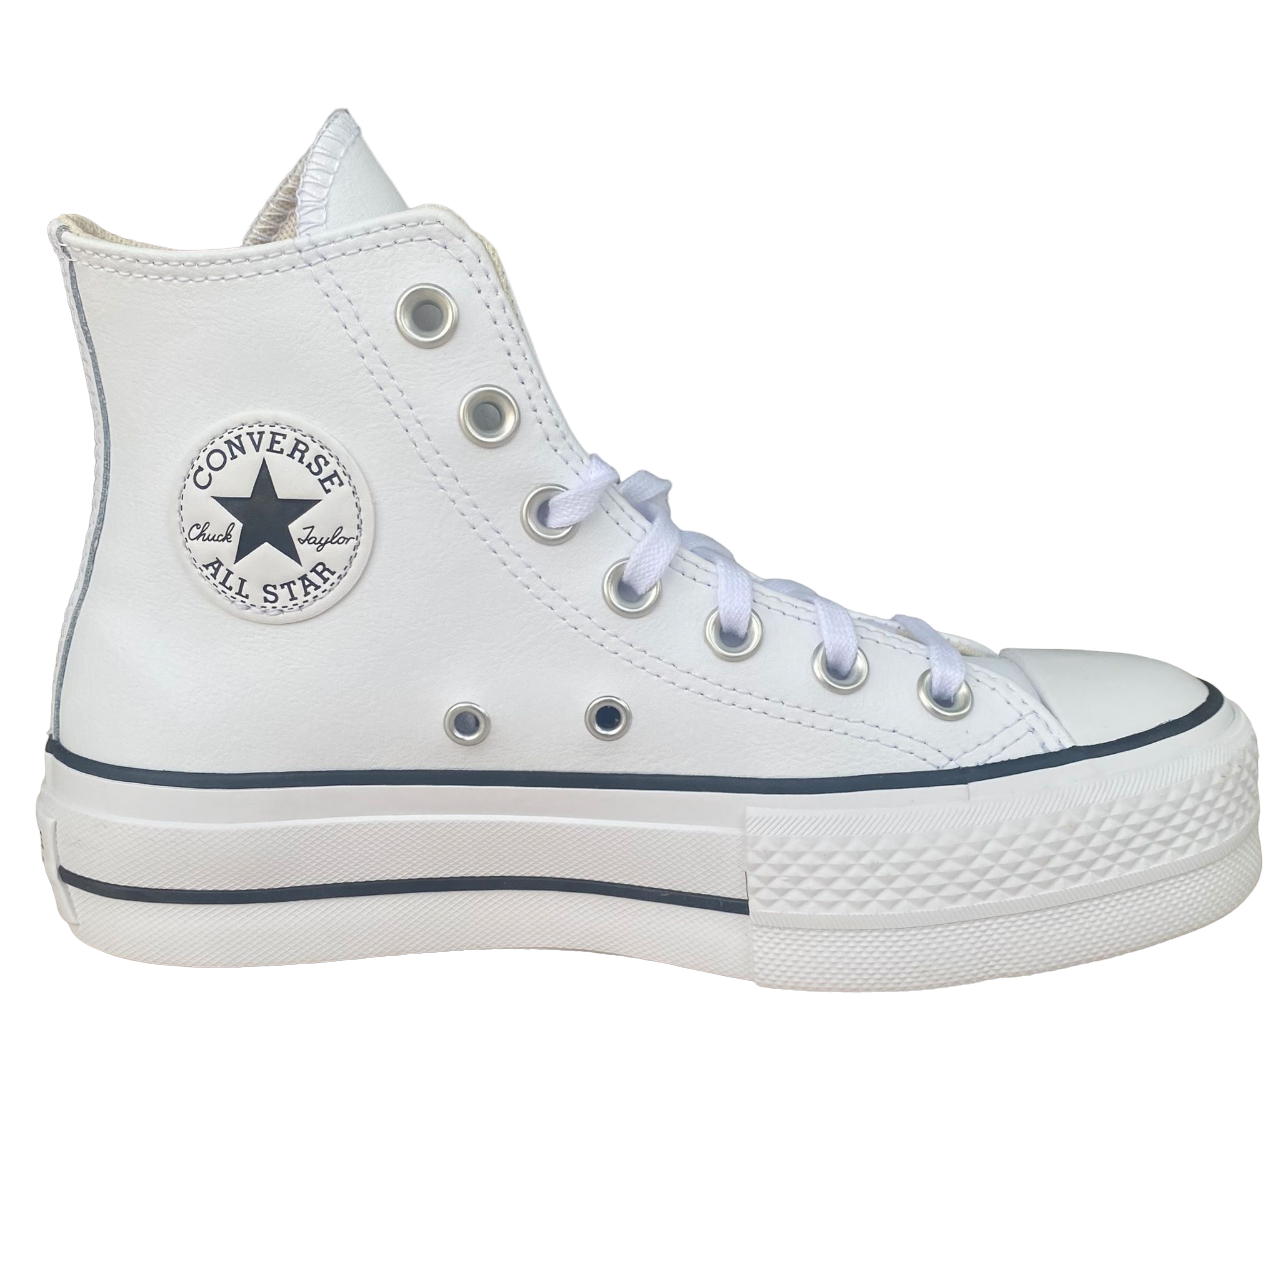 Converse sneakers alta in pelle con zeppa Chuck Taylor All Star Platform Leather 561676C bianco-nero